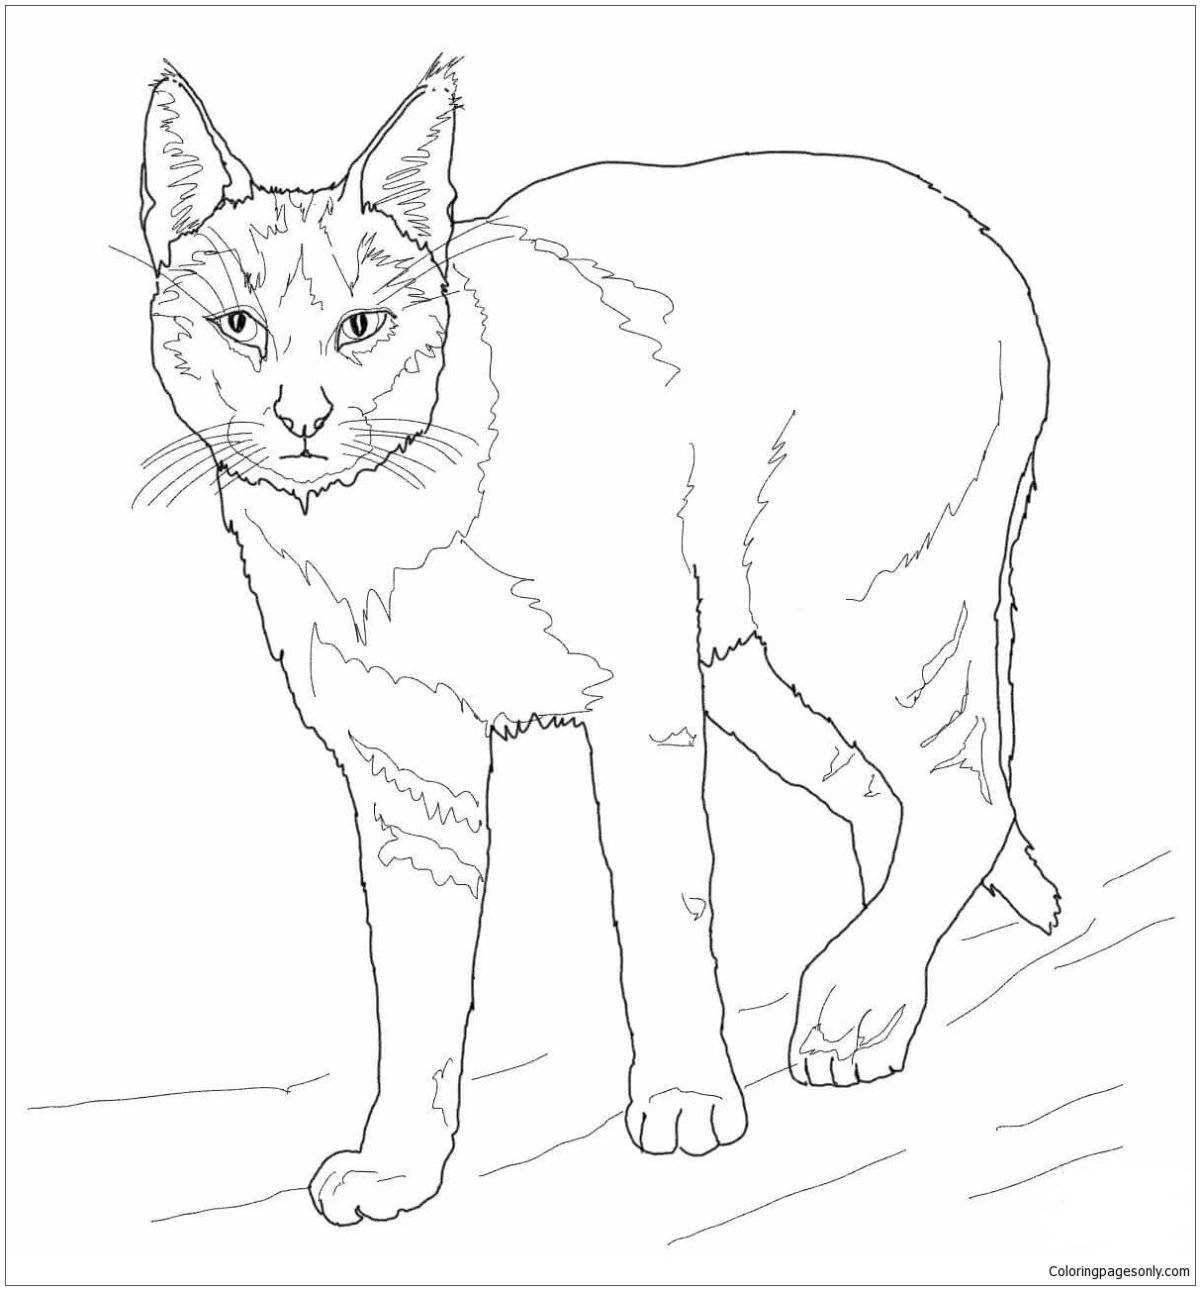 Раскраска милая кавказская лесная кошка